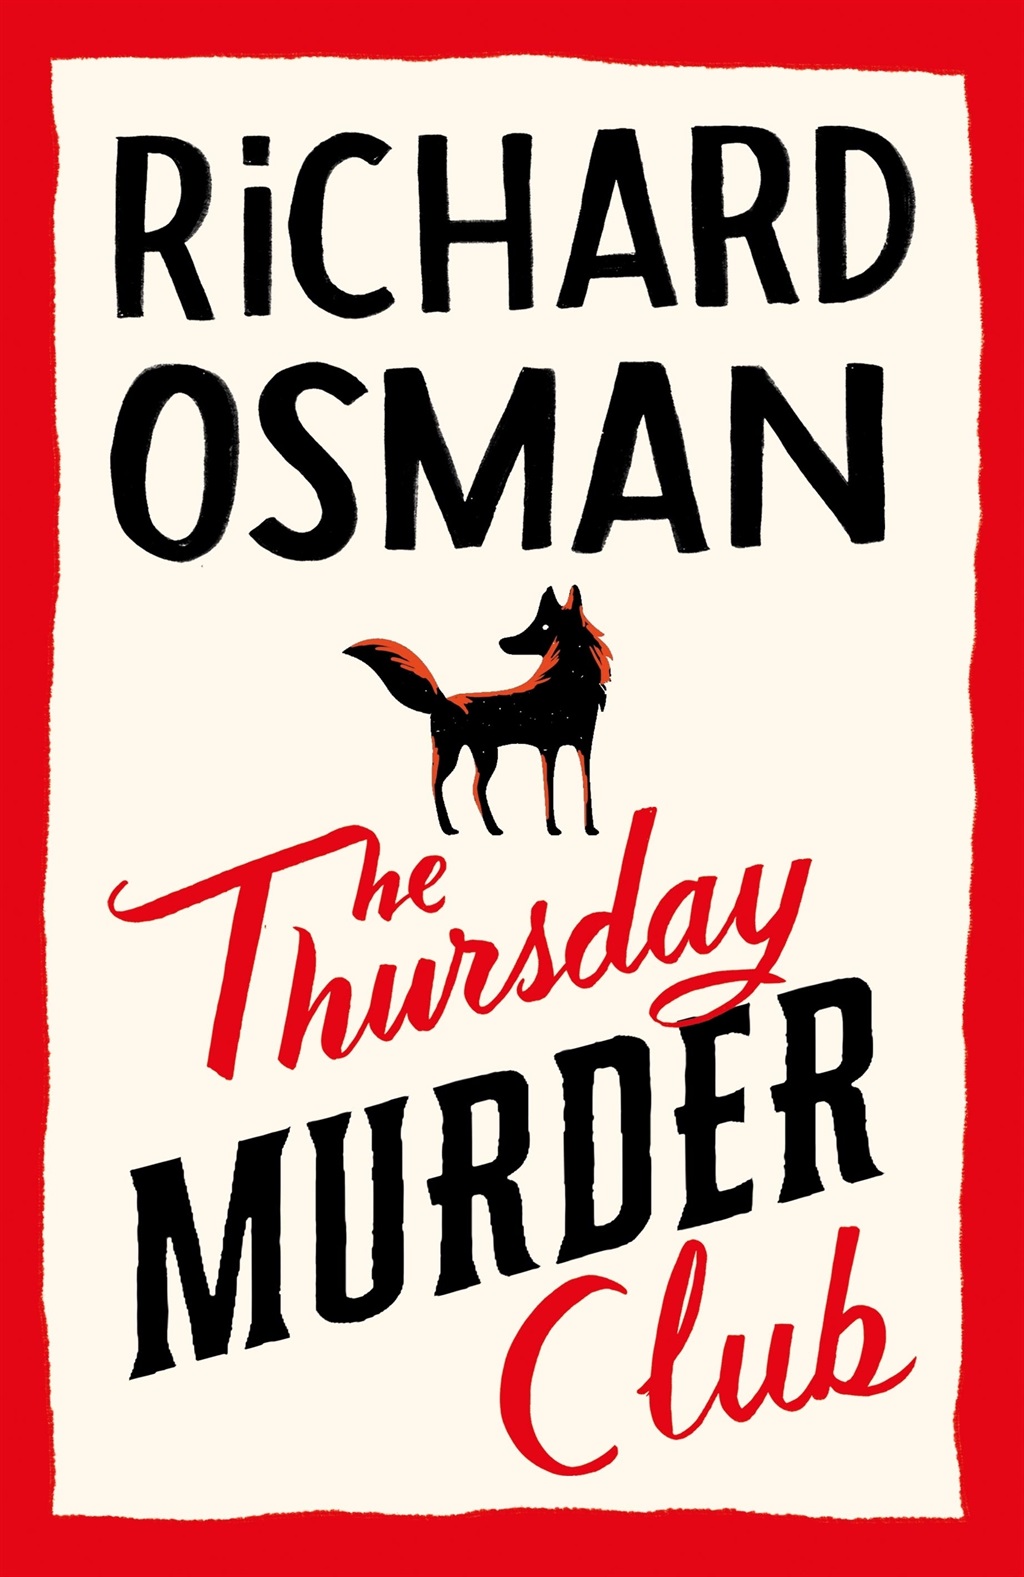 The Thursday murder club by Richard Osman (Photo: 